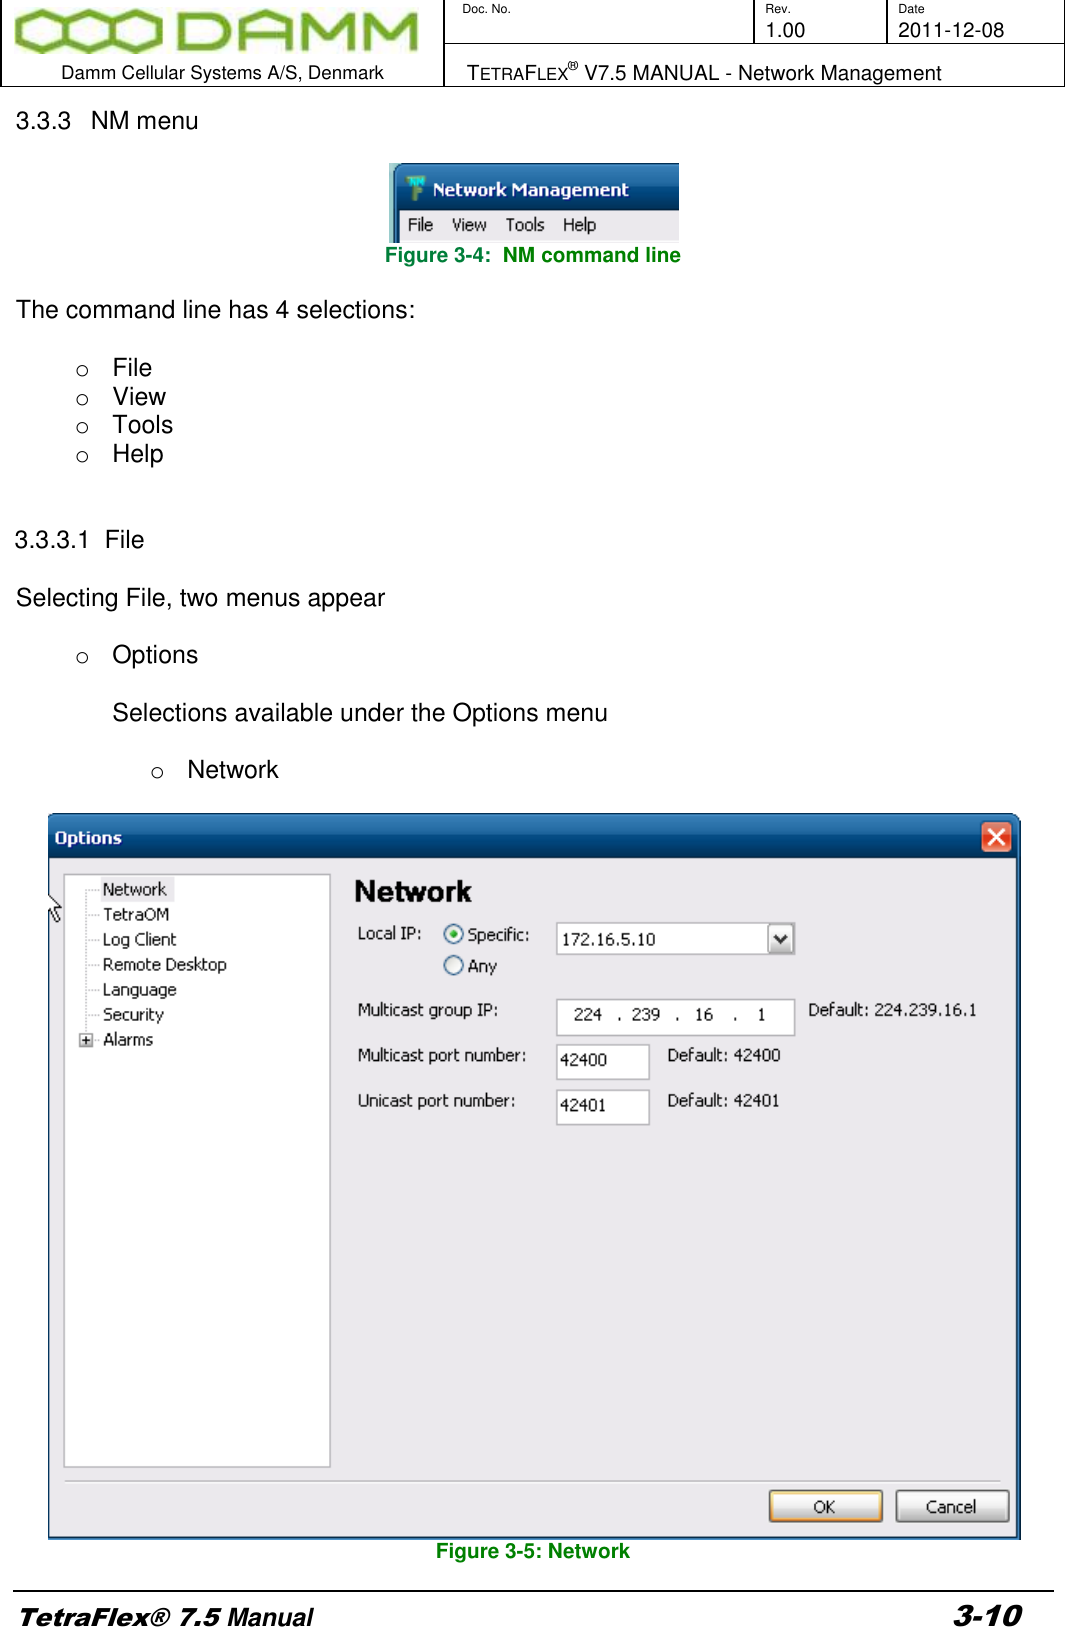        Doc. No. Rev. Date     1.00 2011-12-08  Damm Cellular Systems A/S, Denmark   TETRAFLEX® V7.5 MANUAL - Network Management  TetraFlex® 7.5 Manual 3-10 3.3.3  NM menu   Figure 3-4:  NM command line  The command line has 4 selections:  o  File o  View o  Tools o  Help   3.3.3.1  File  Selecting File, two menus appear  o  Options  Selections available under the Options menu  o  Network   Figure 3-5: Network 